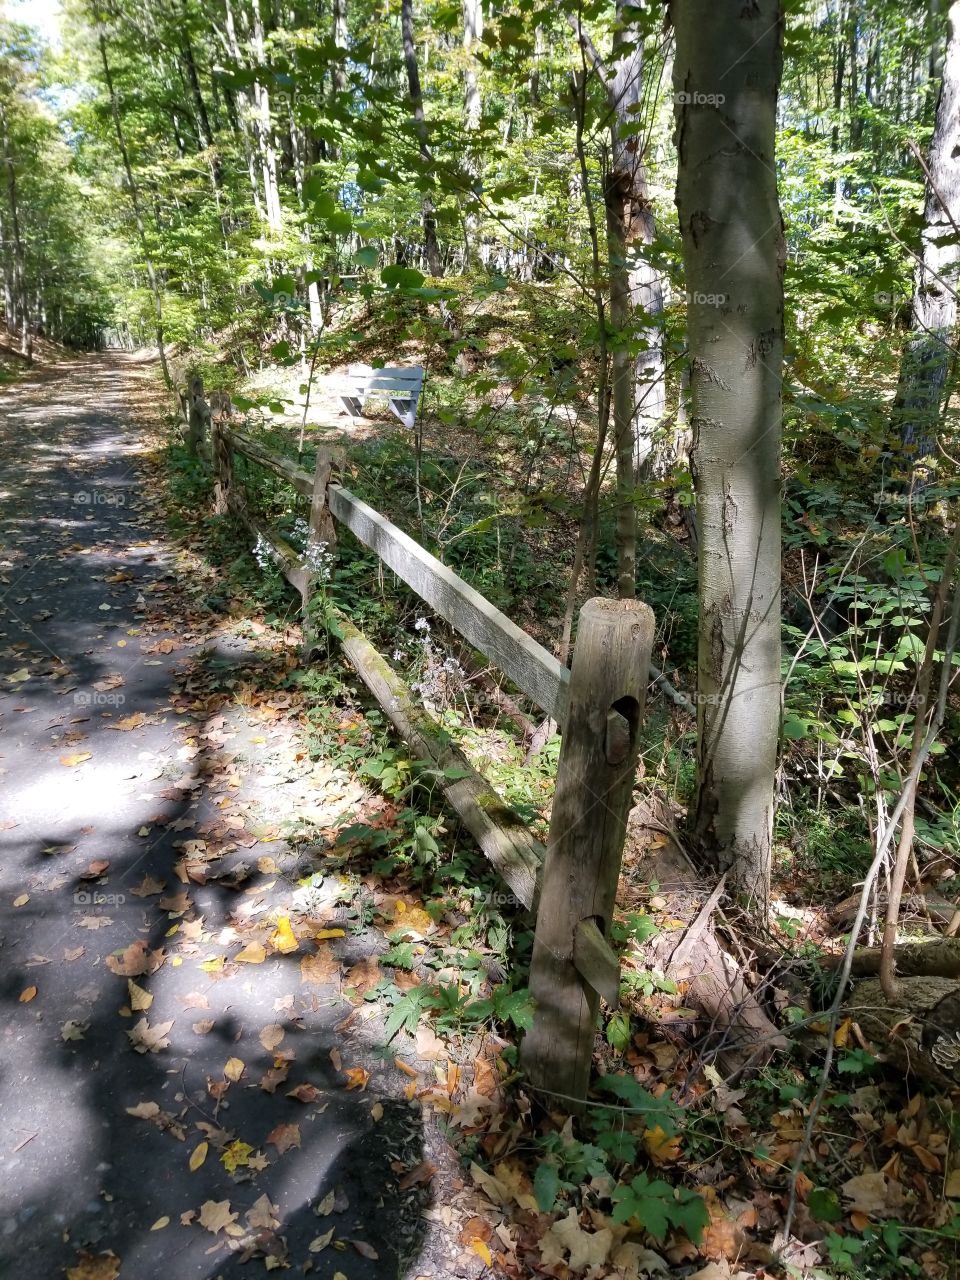 Fence on a path